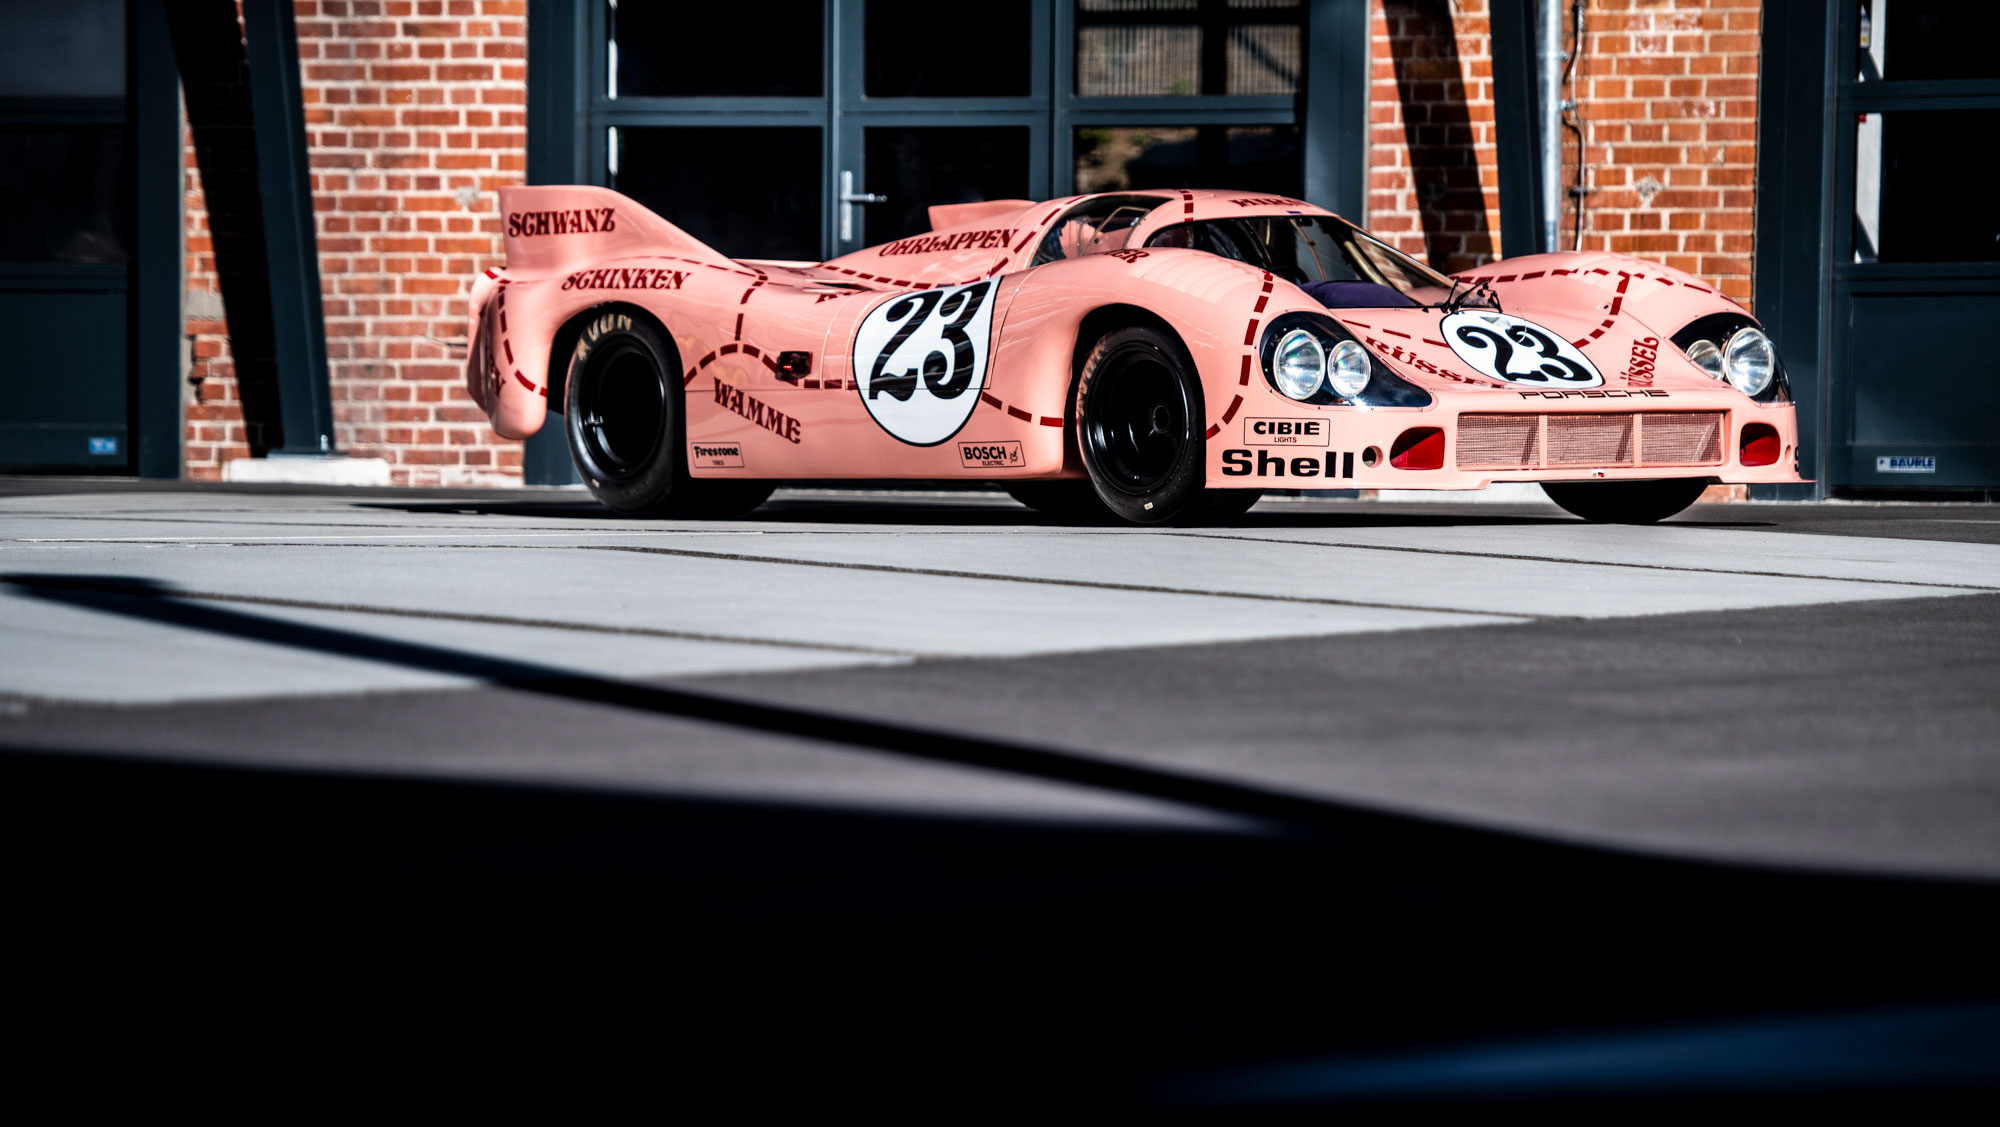 Porsche 917/20 ‘Pink Pig’ in front of brick building